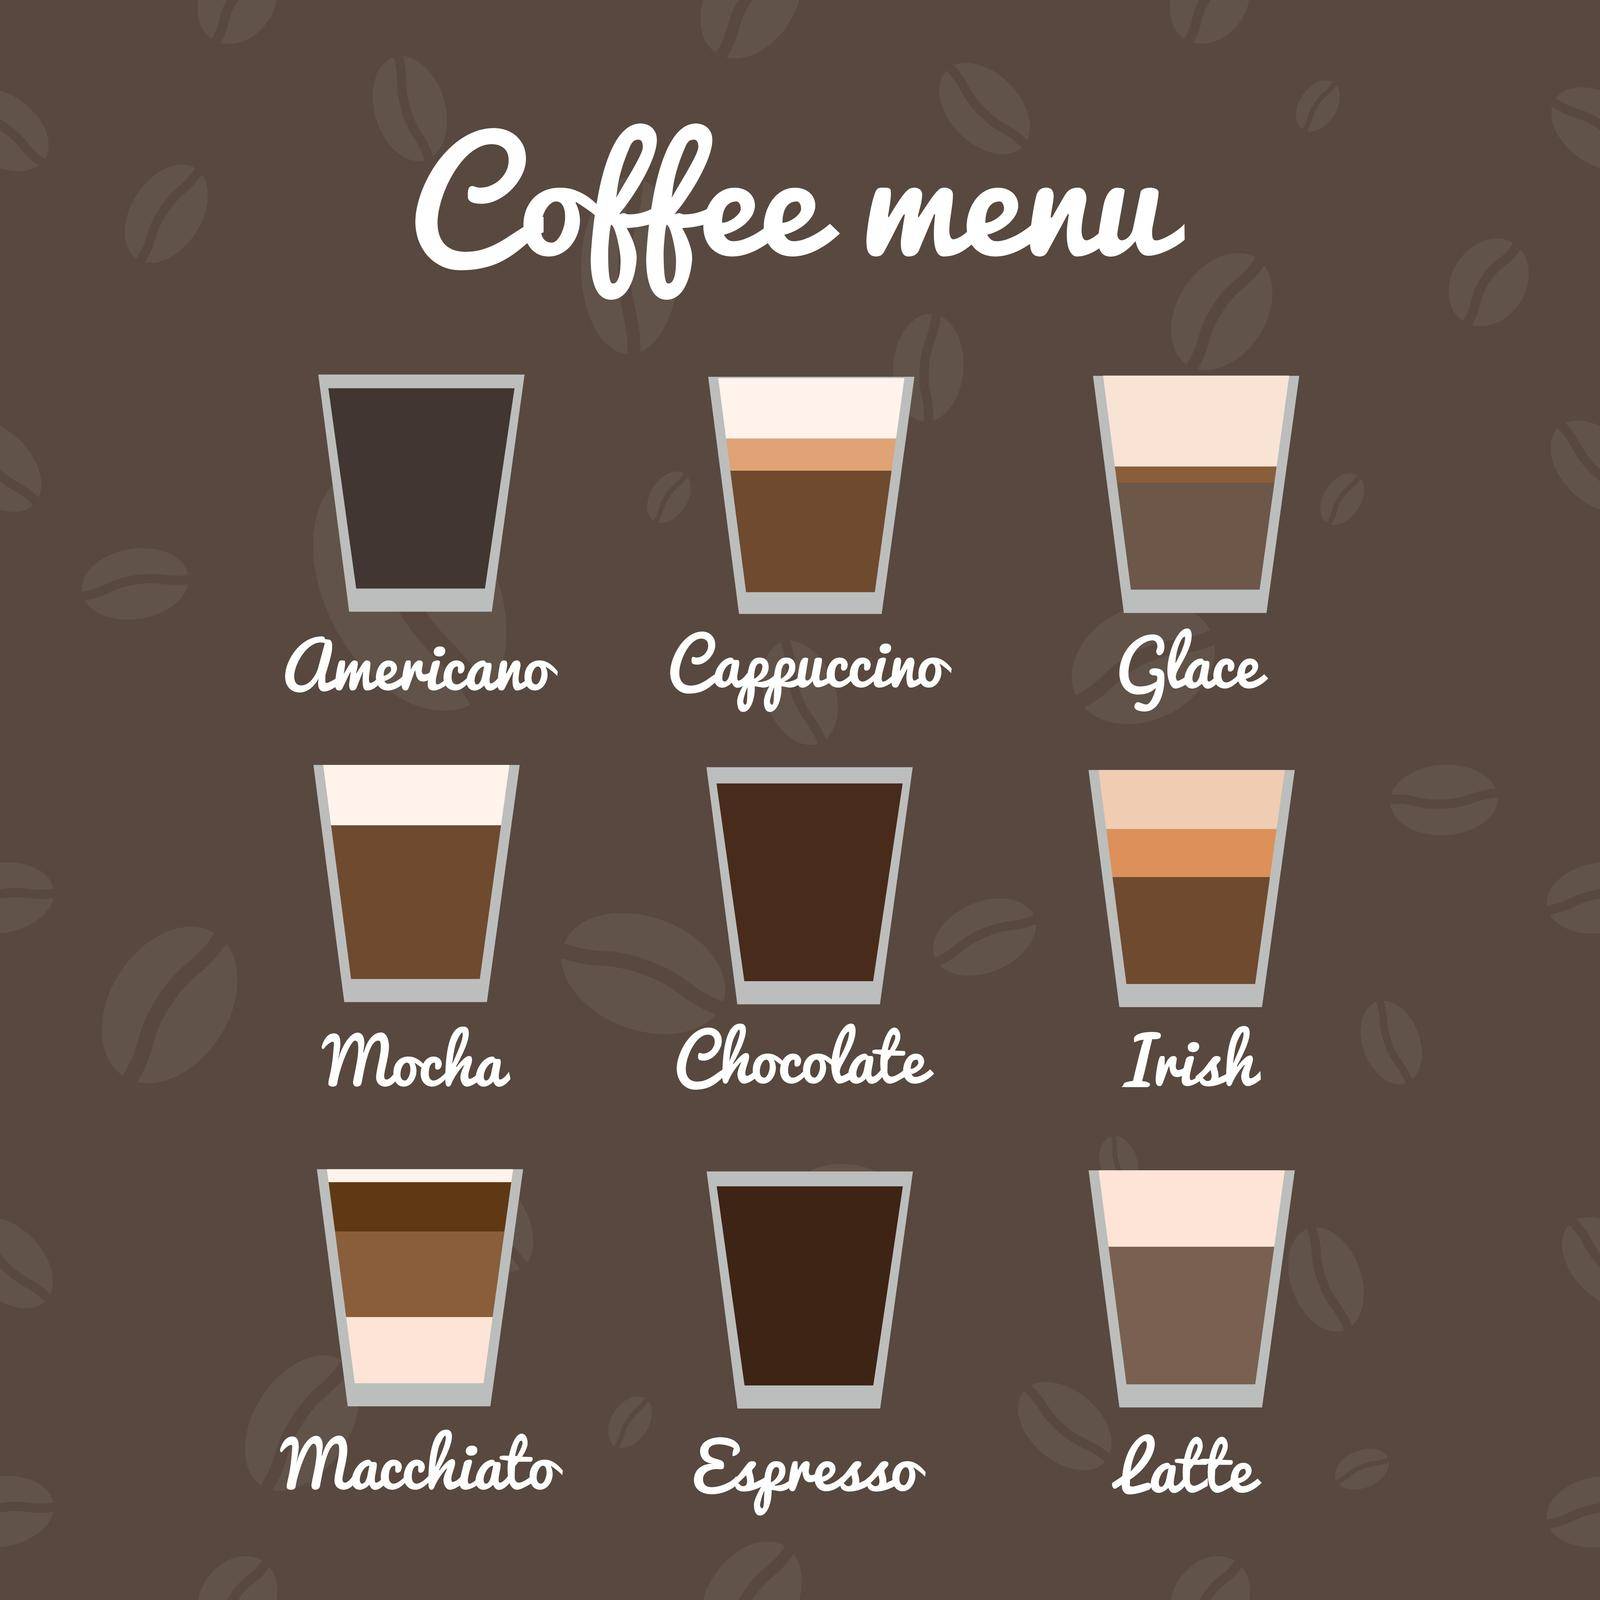 Coffee menu. by Minur